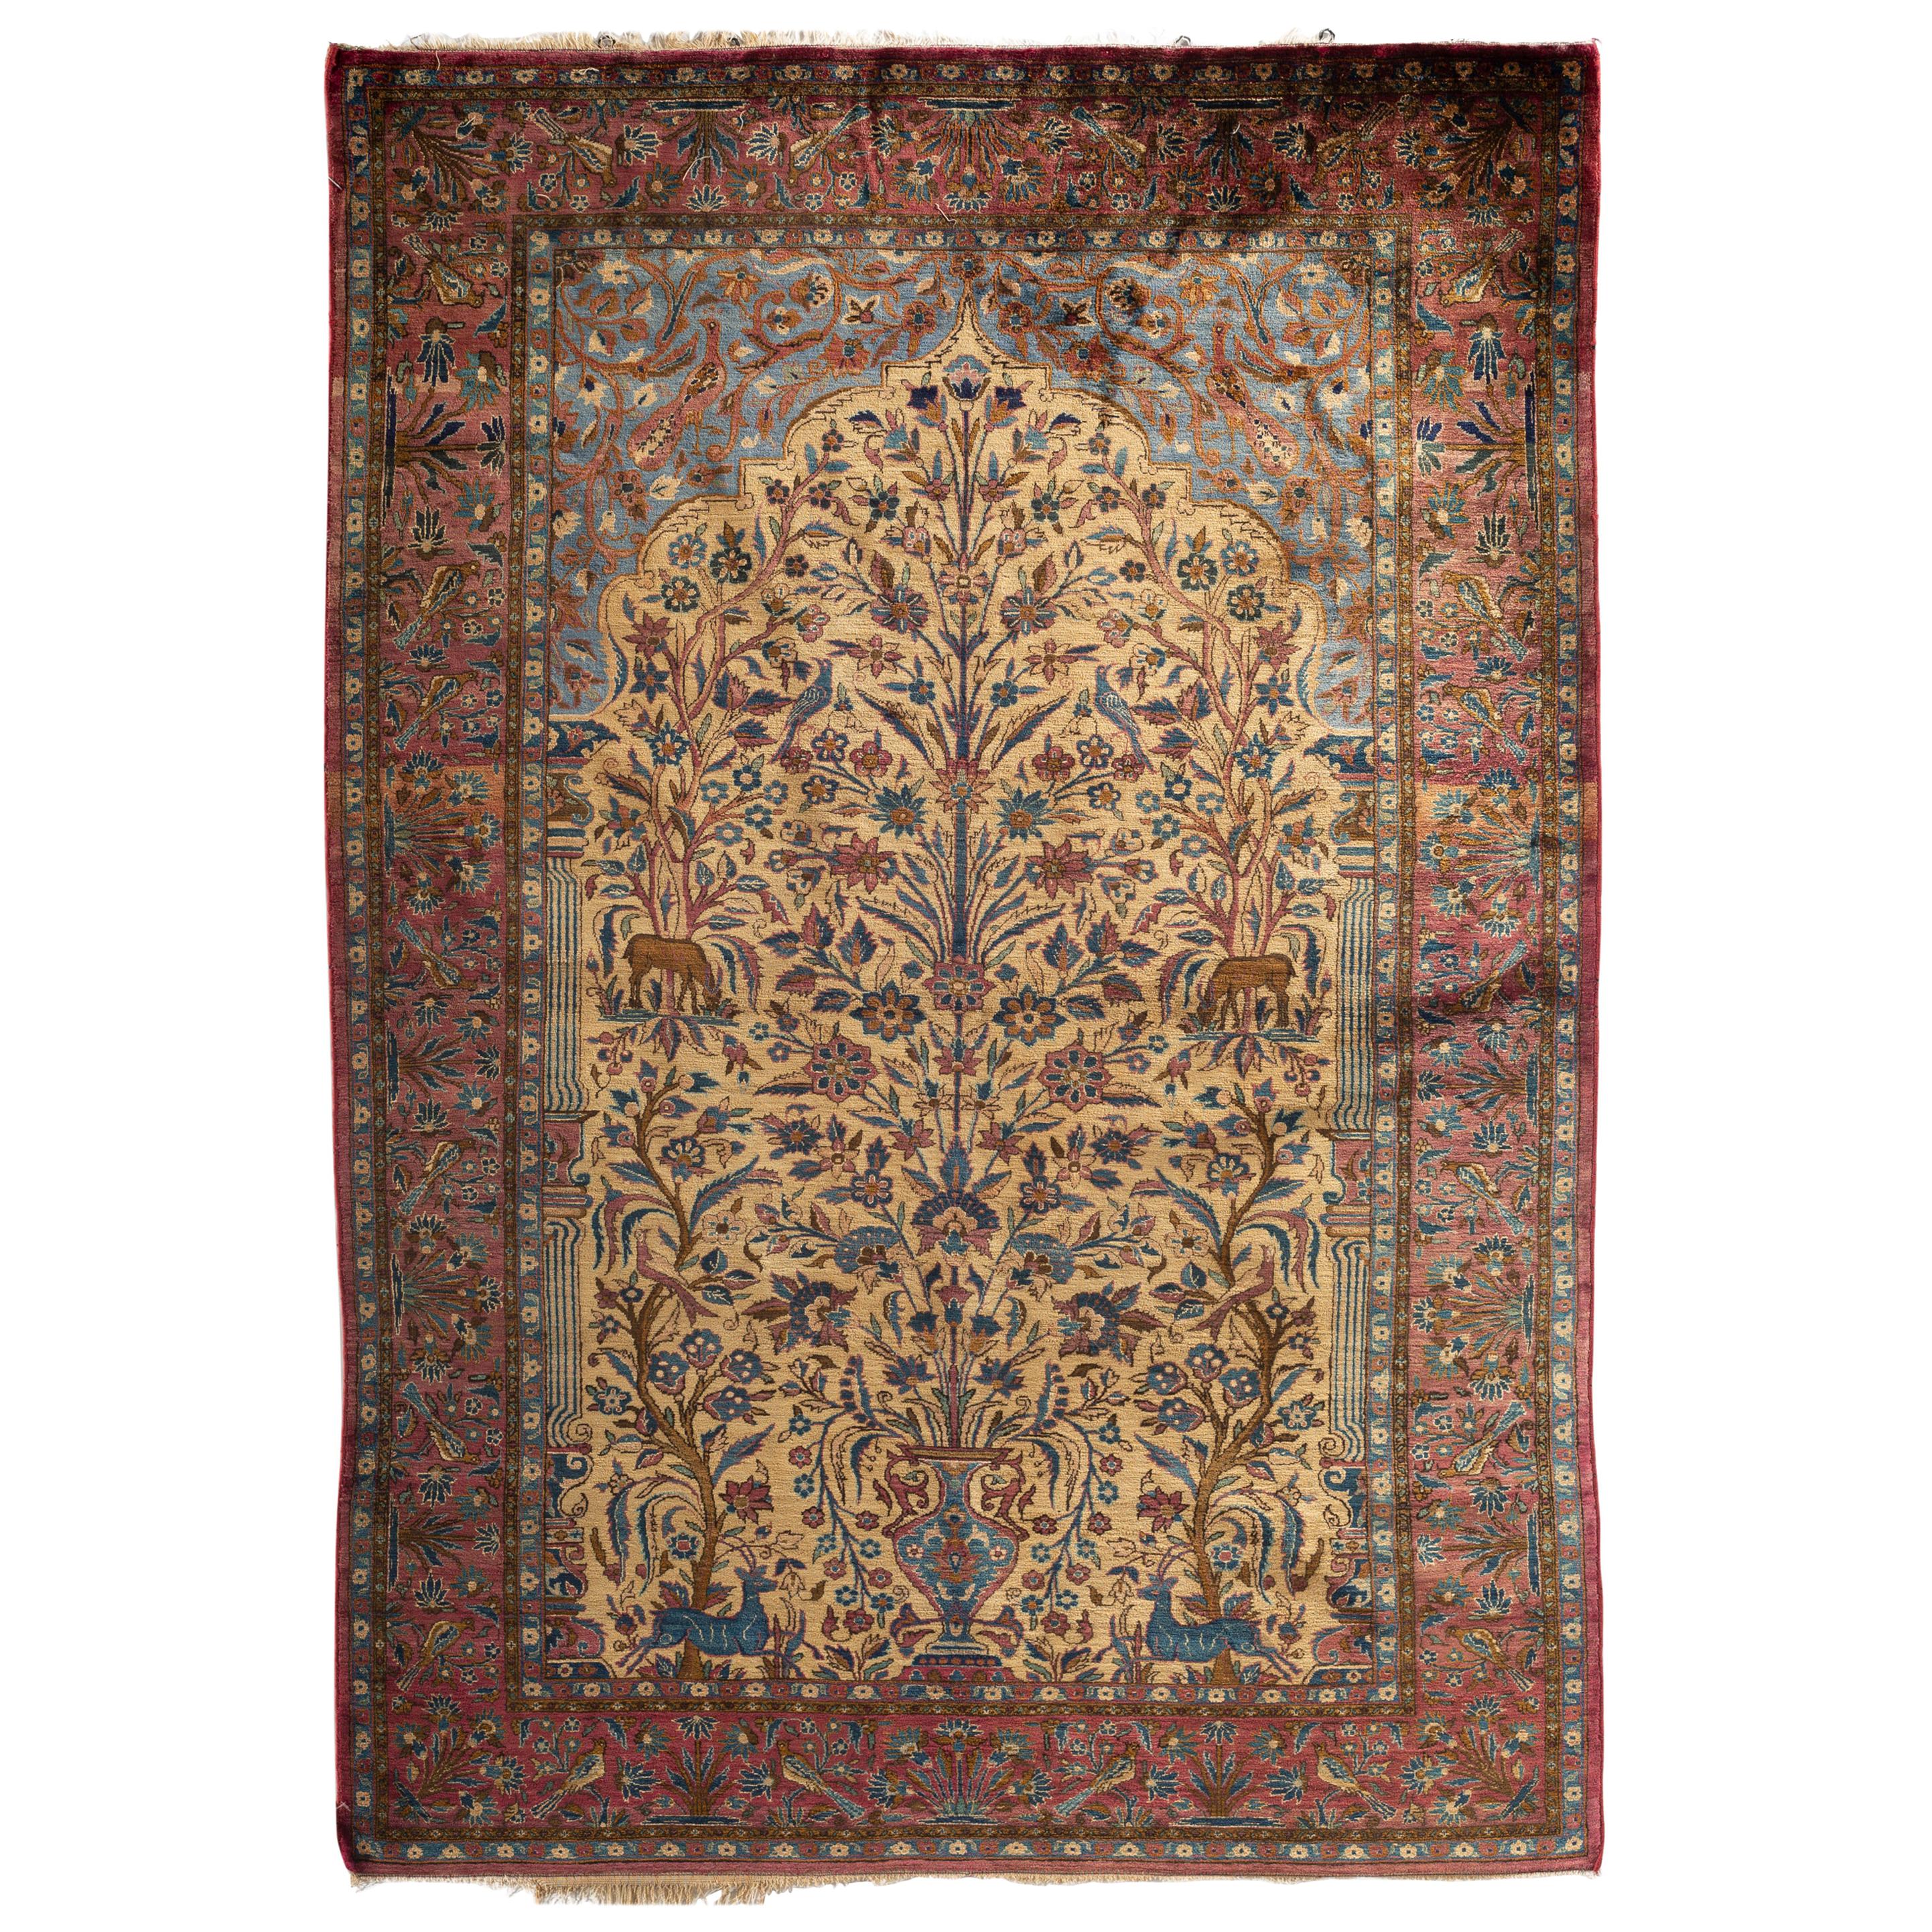 How do I identify a Kashan rug?